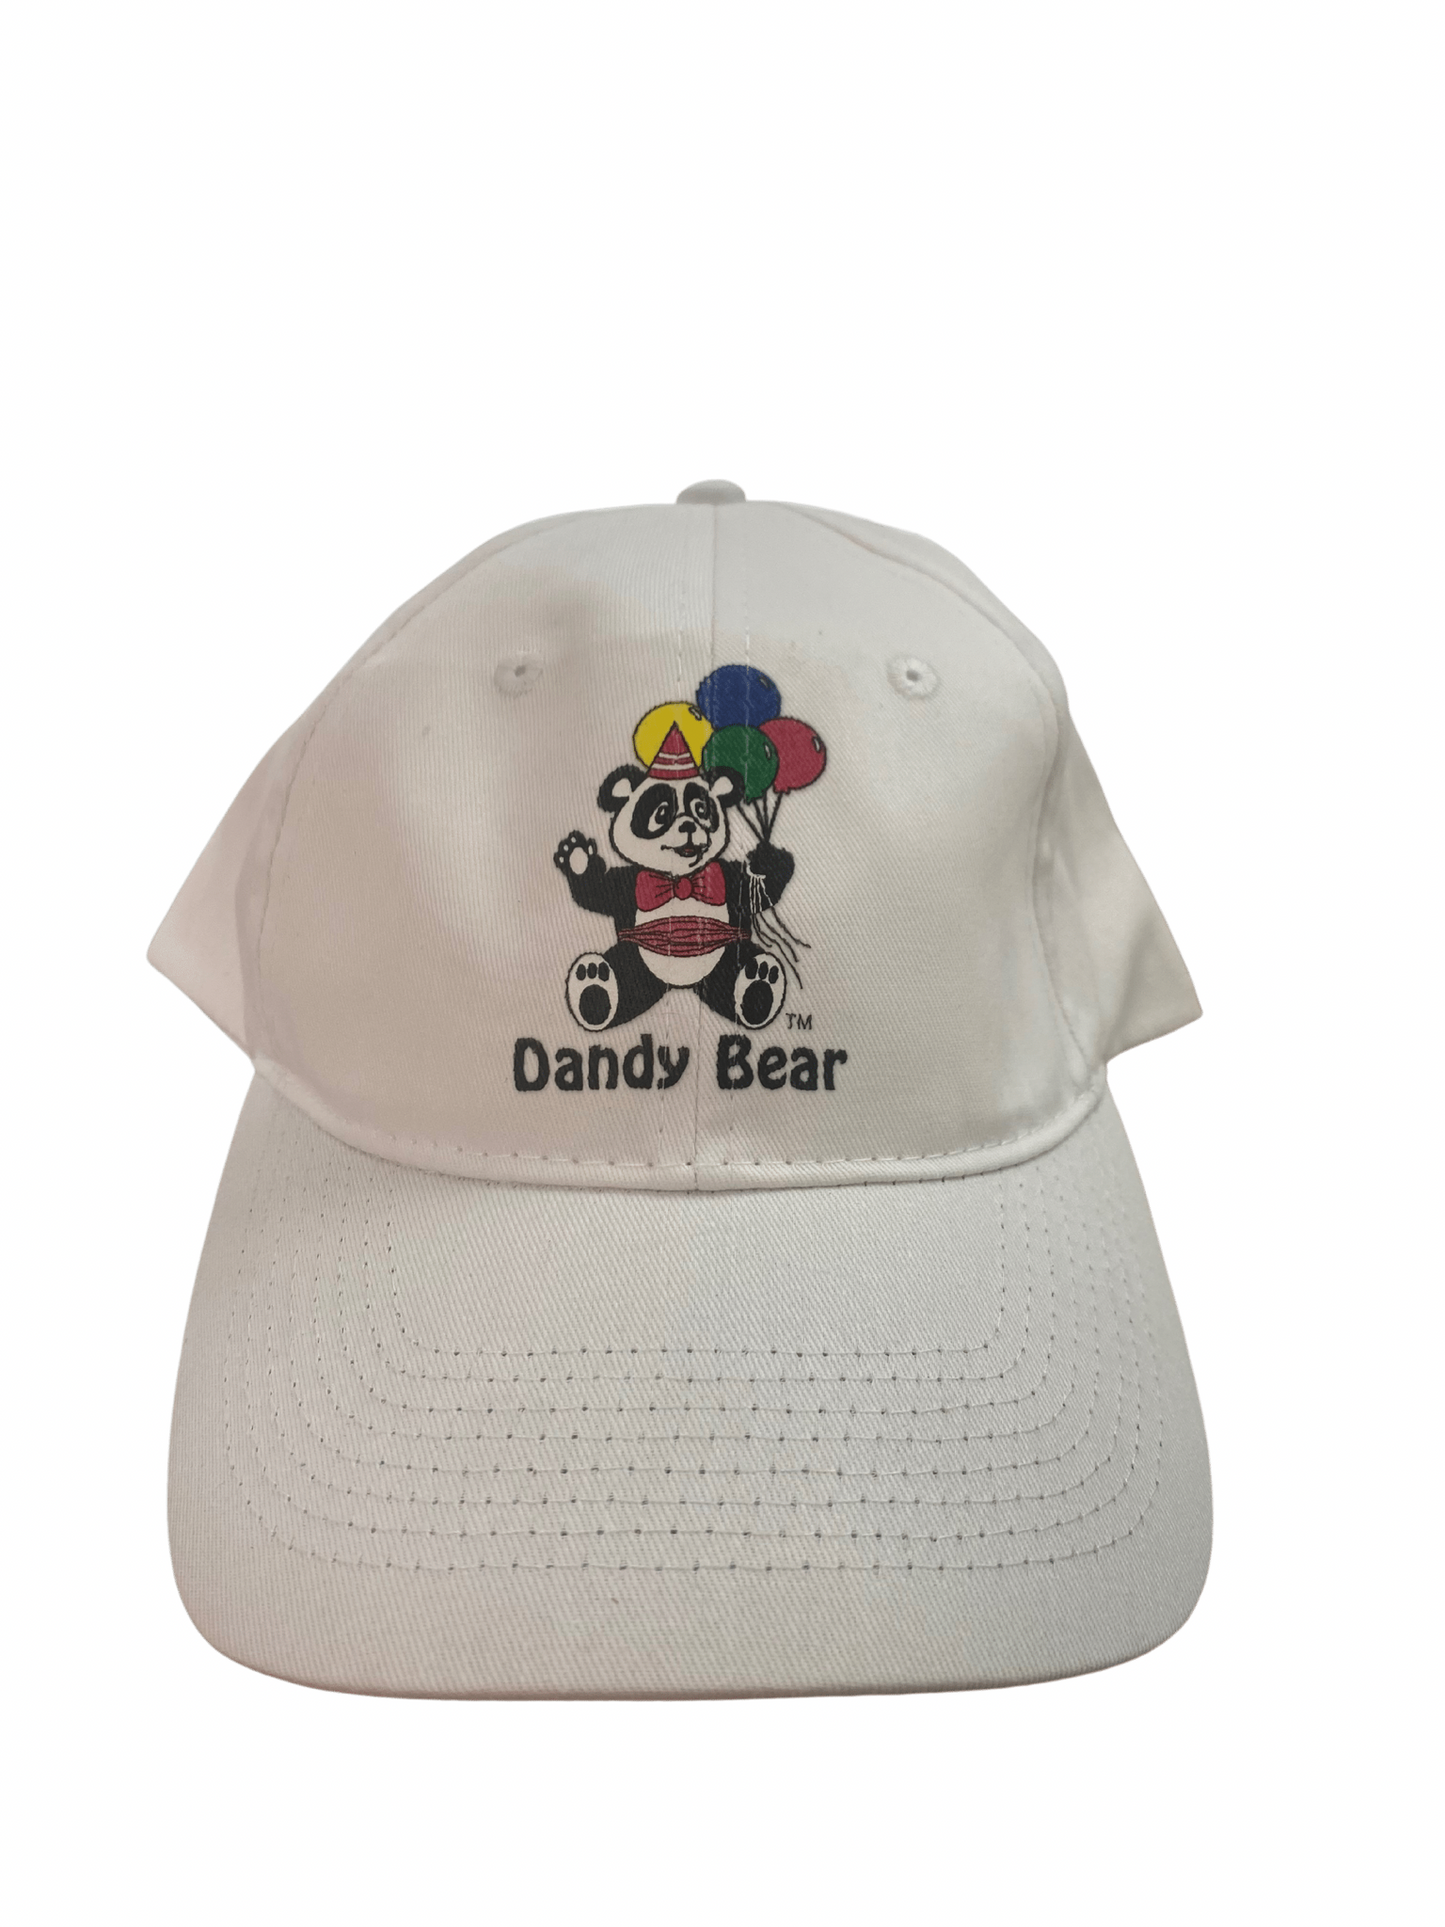 Dandy Bear Dad Hat